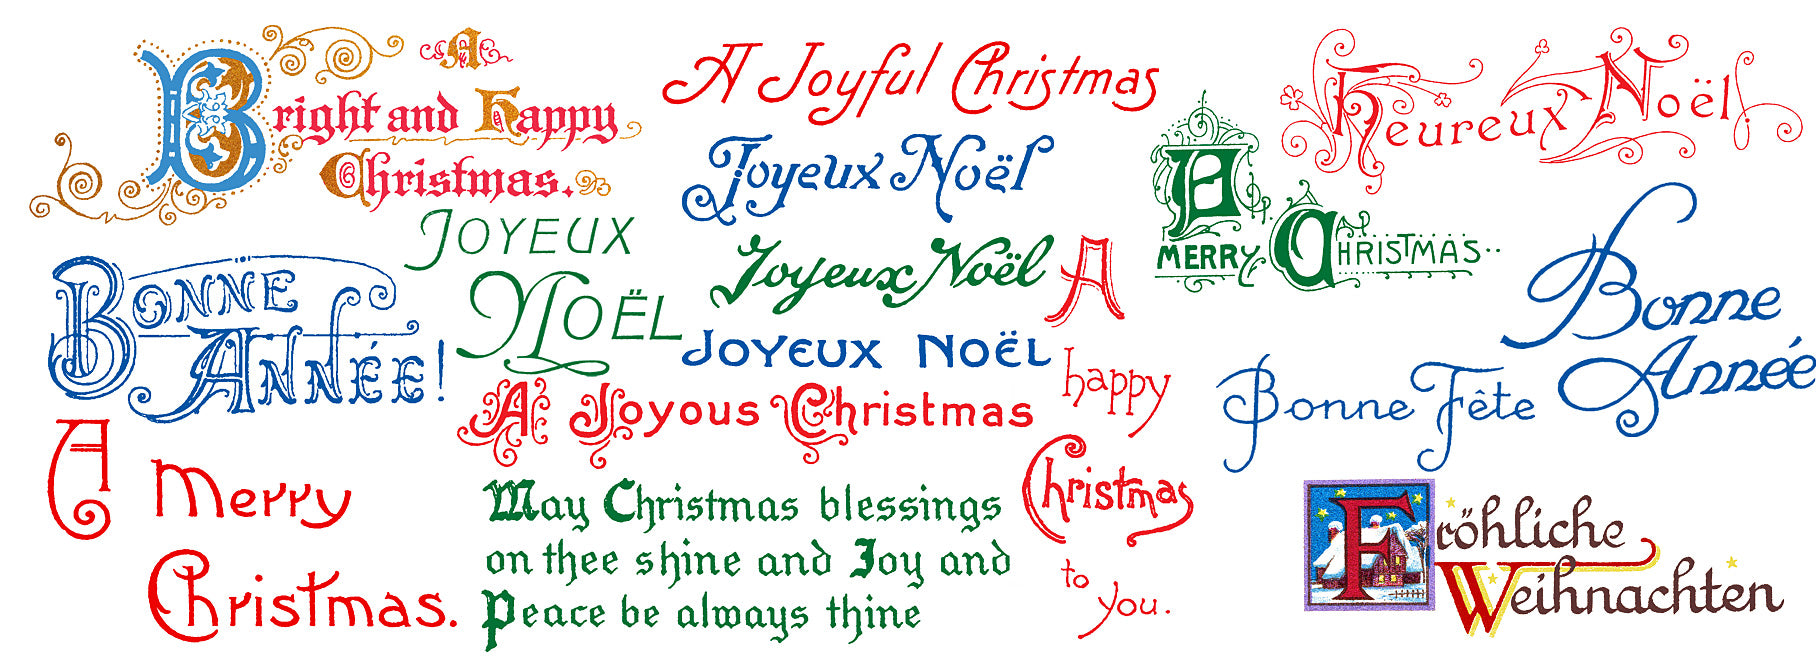 New vintage Christmas greetings digital graphics.